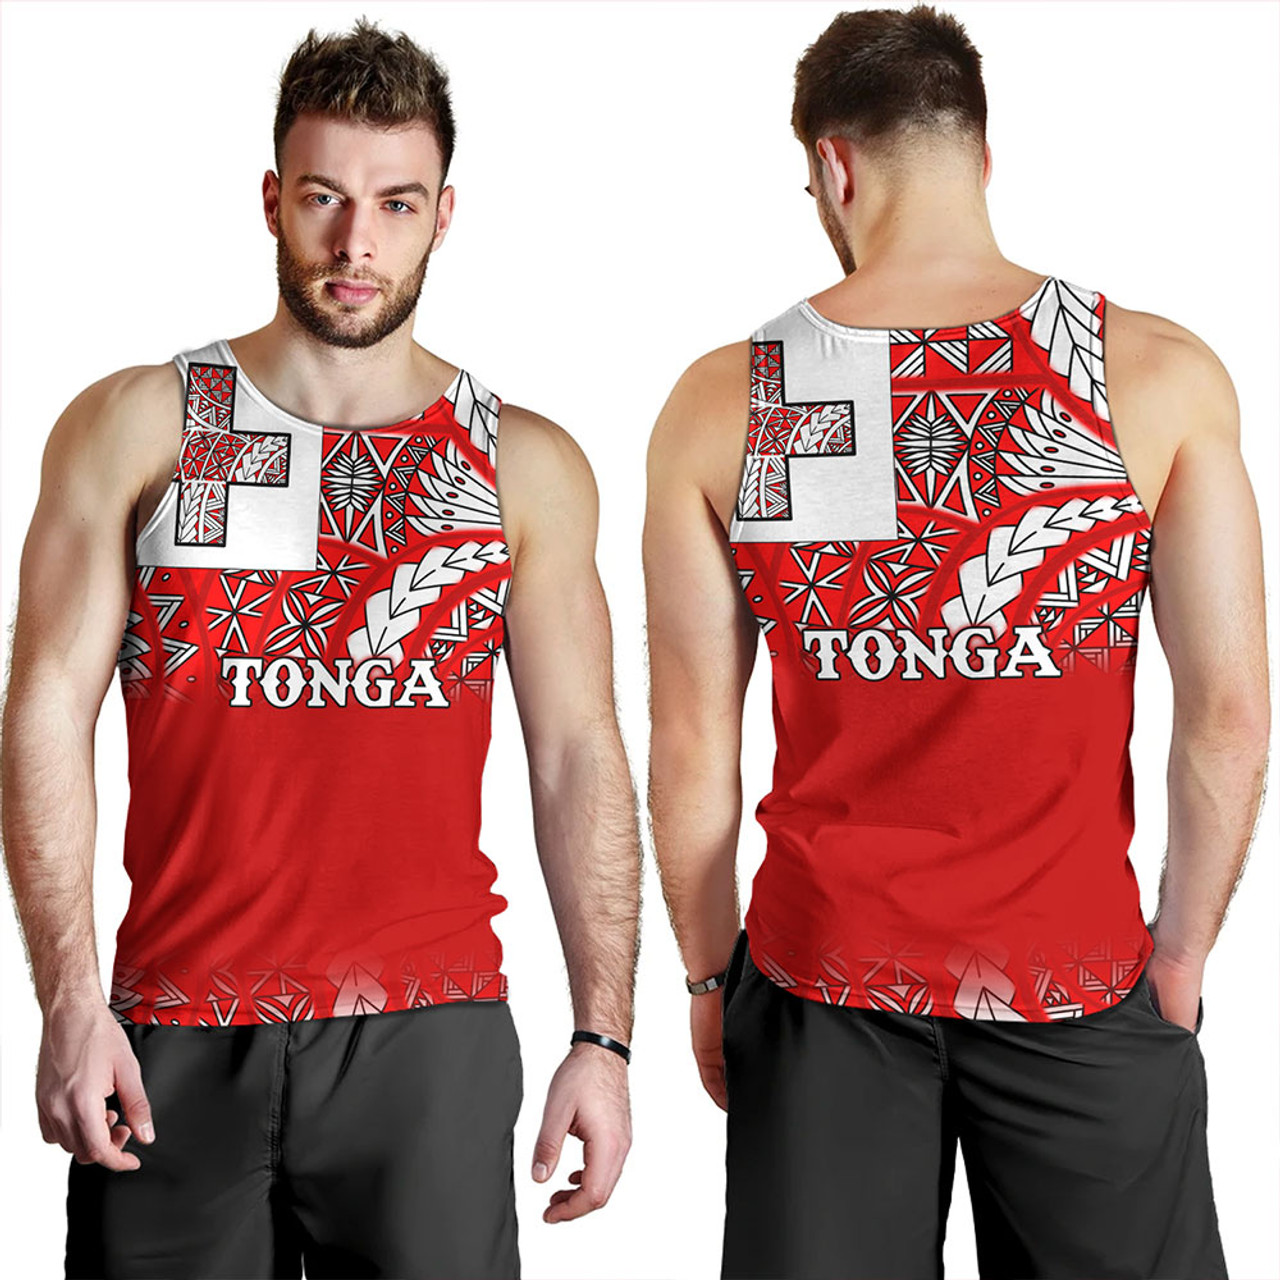 Tonga Tank Top - Tonga Flag Color With Traditional Patterns